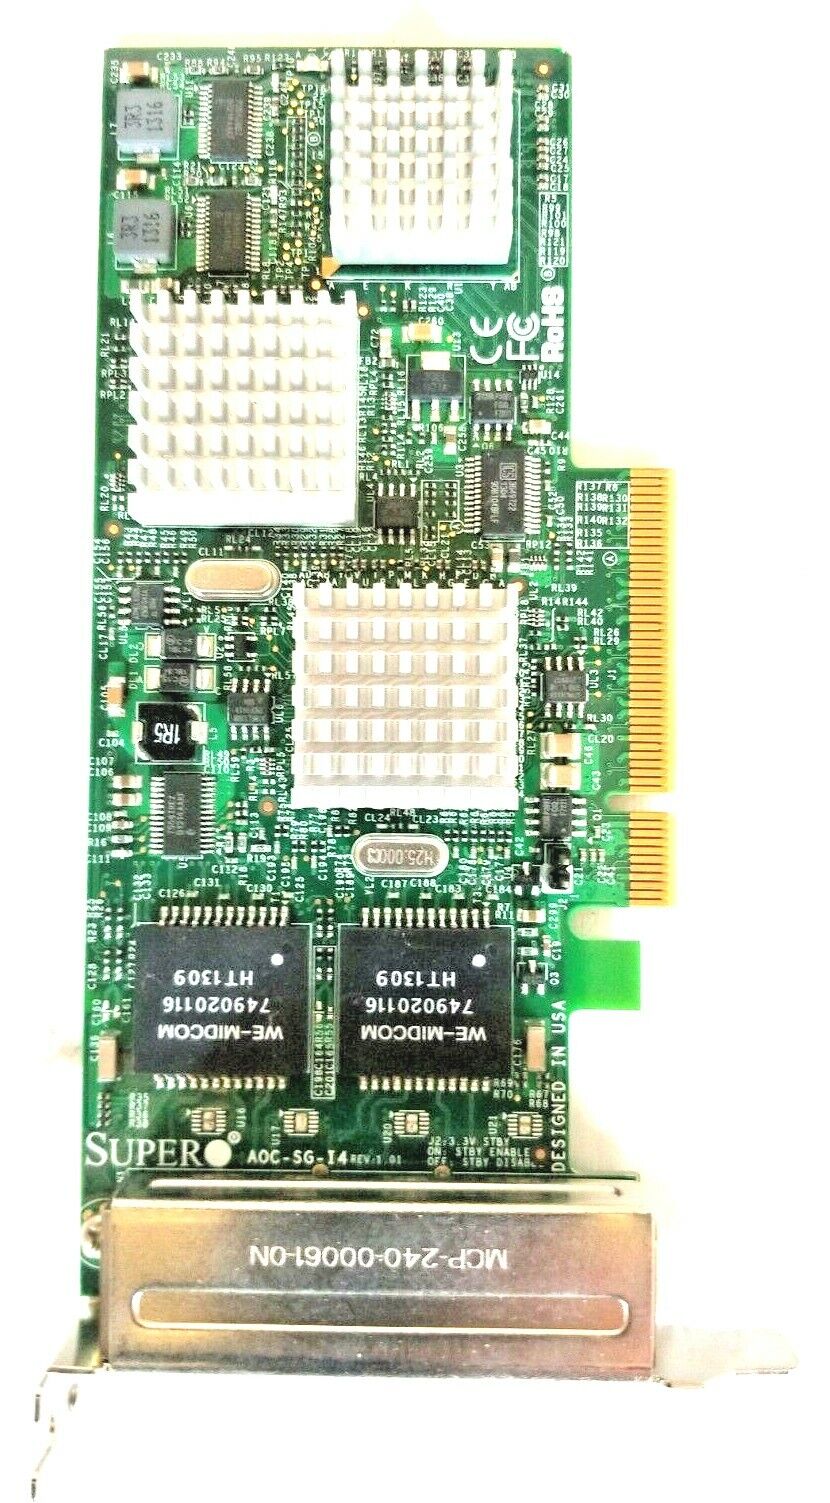 SUPERMICRO AOC-SG-I4 4 Port Gigabit Networking Adapter